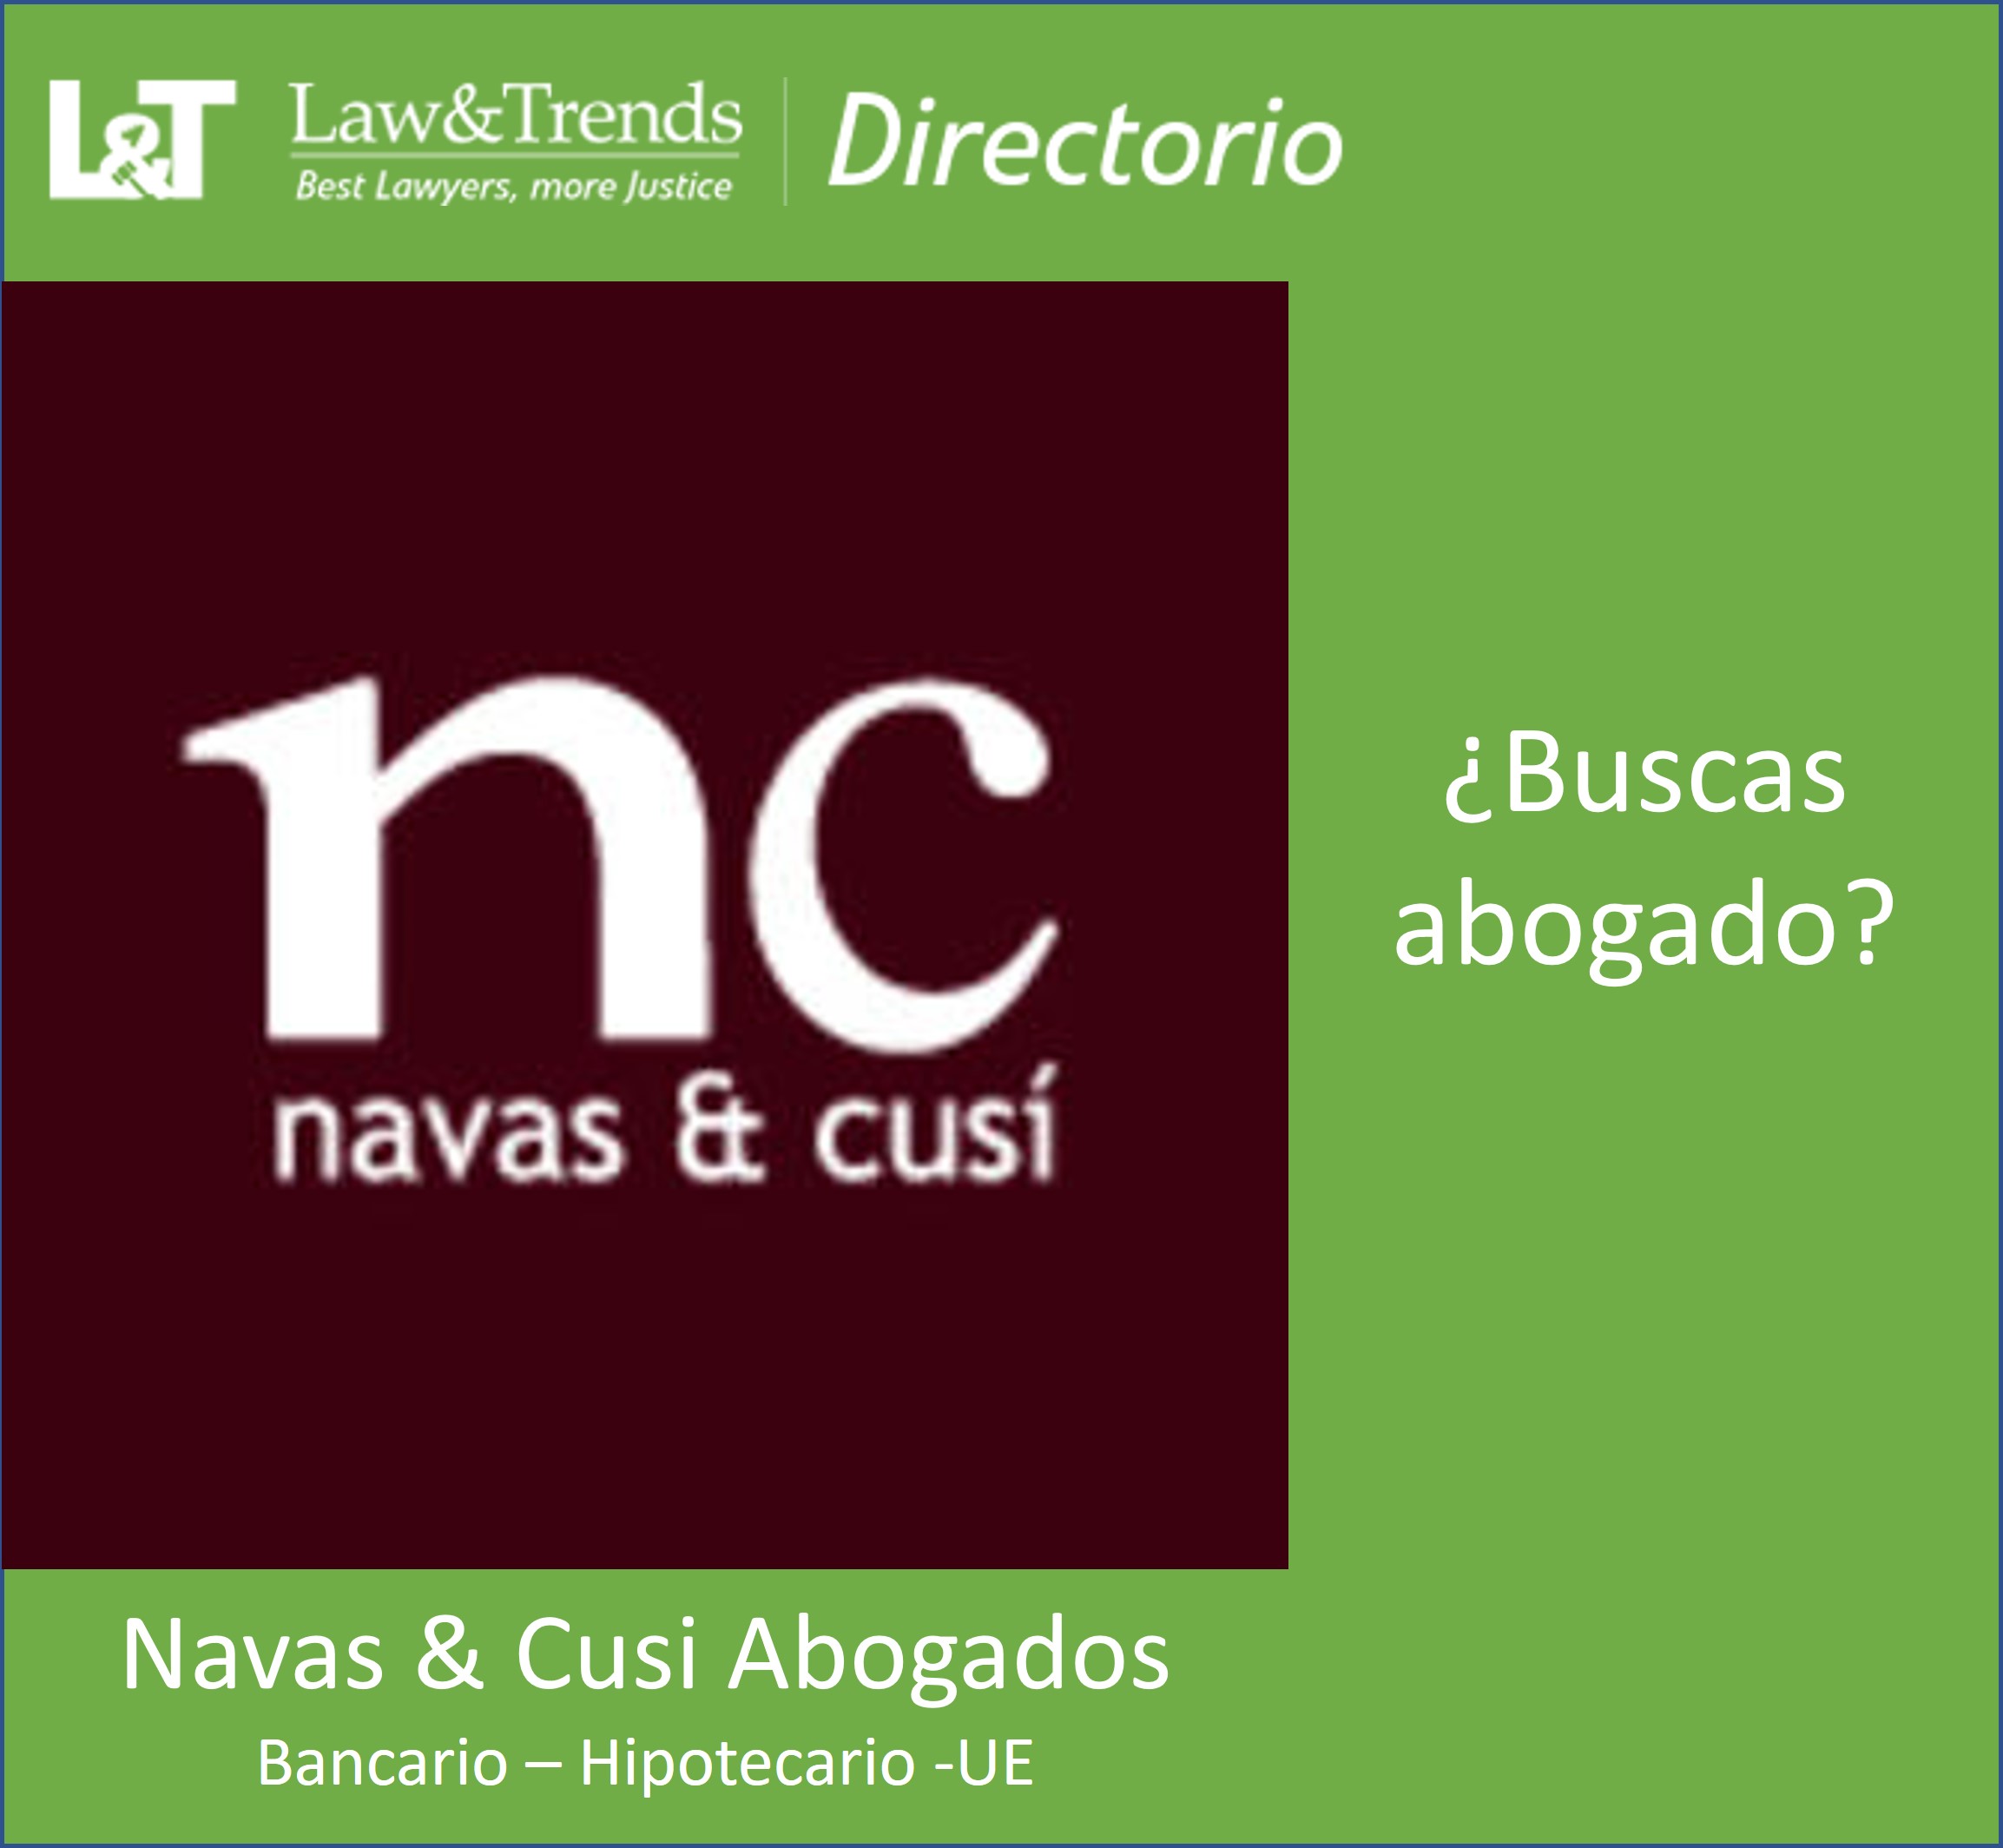 Navas & Cusi Abogados abogado madrid
